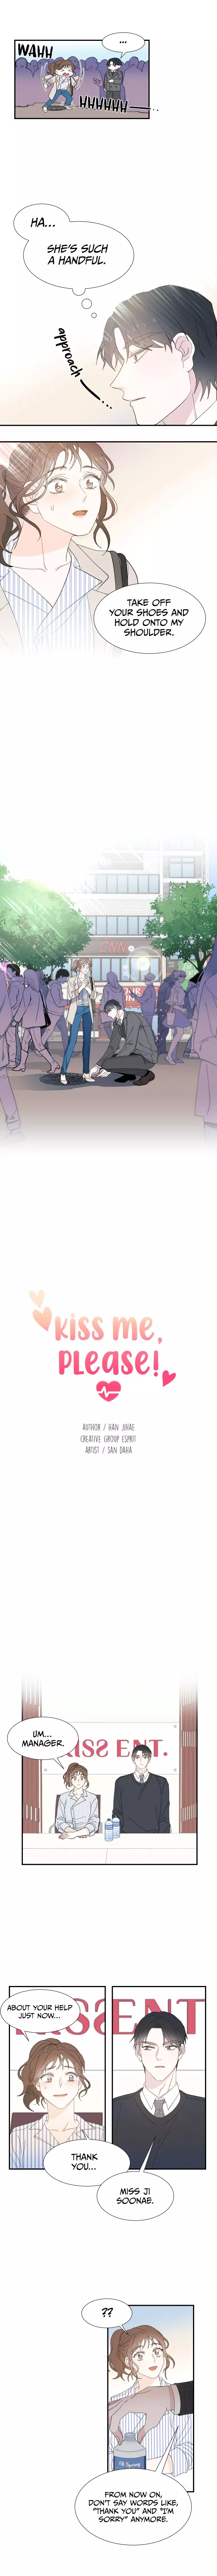 Kiss Me Please - 6 page 1